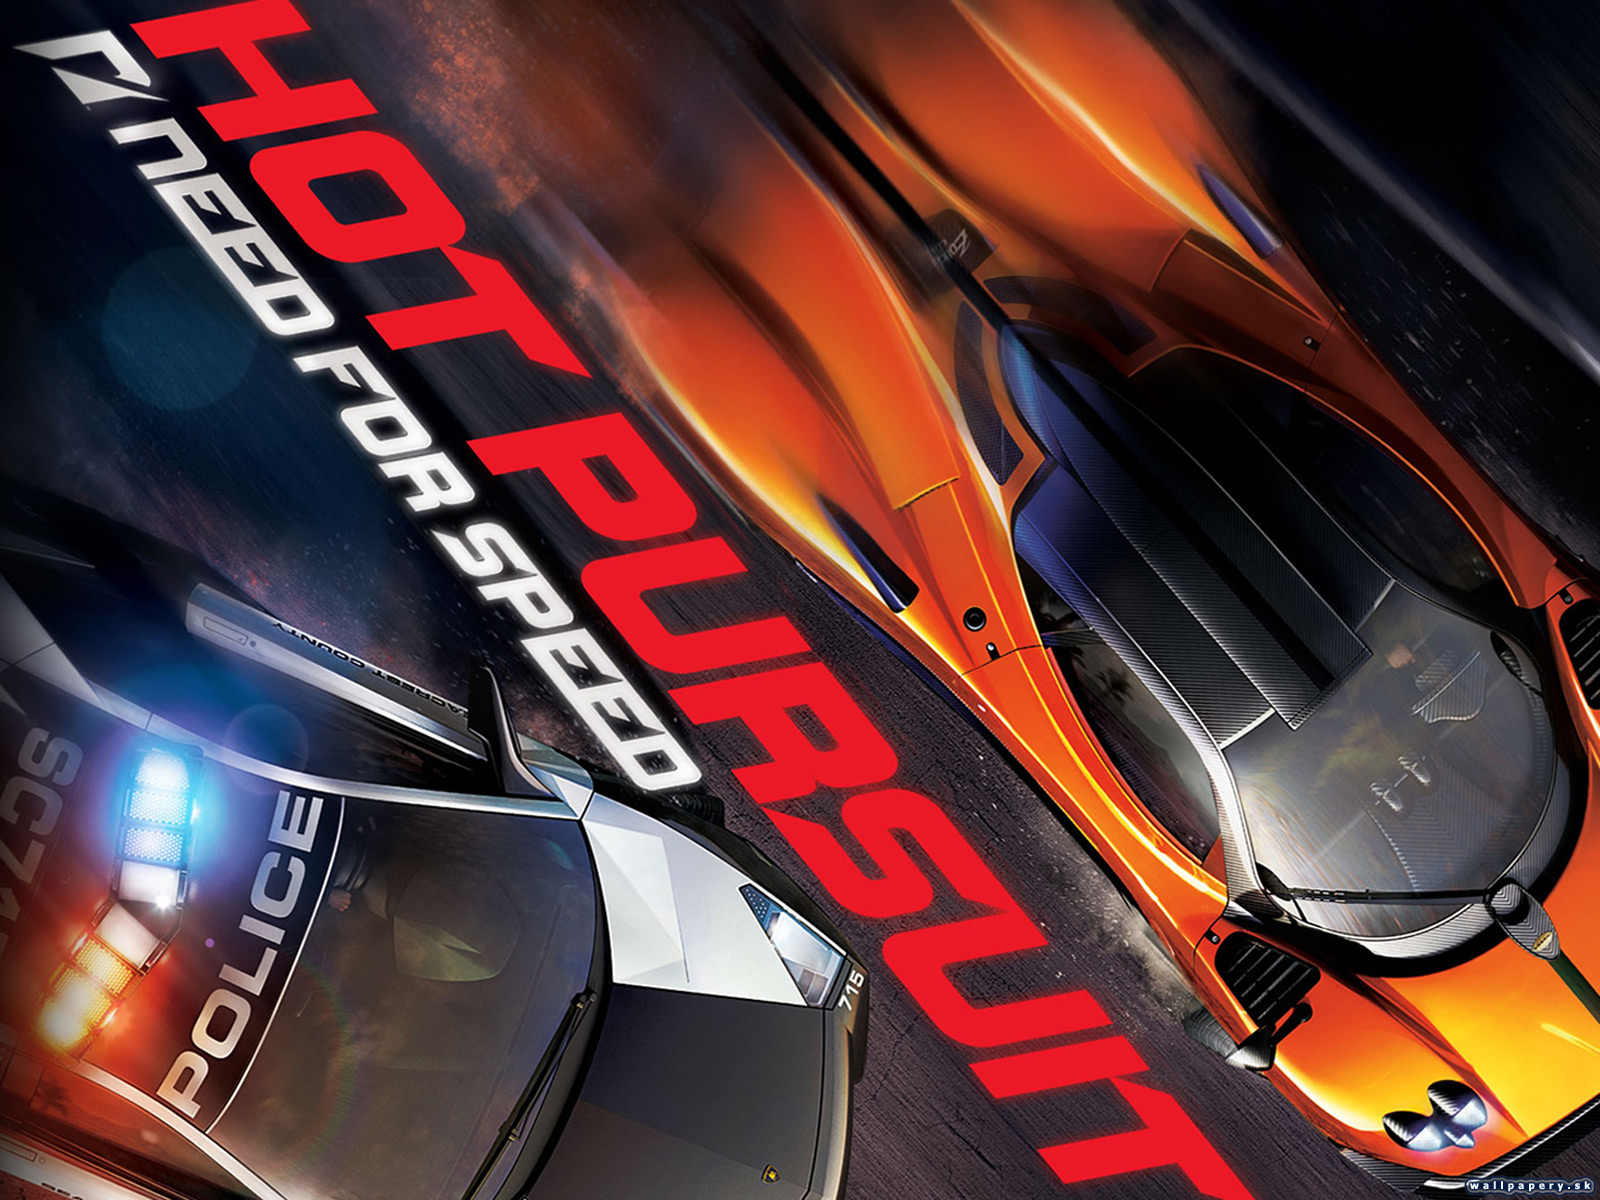 Горячая спид. Need for Speed hot Pursuit ps4. Need for Speed hot Pursuit 2010 обложка. Need for Speed hot Pursuit 2010 Remastered. Need for Speed пурсуит.